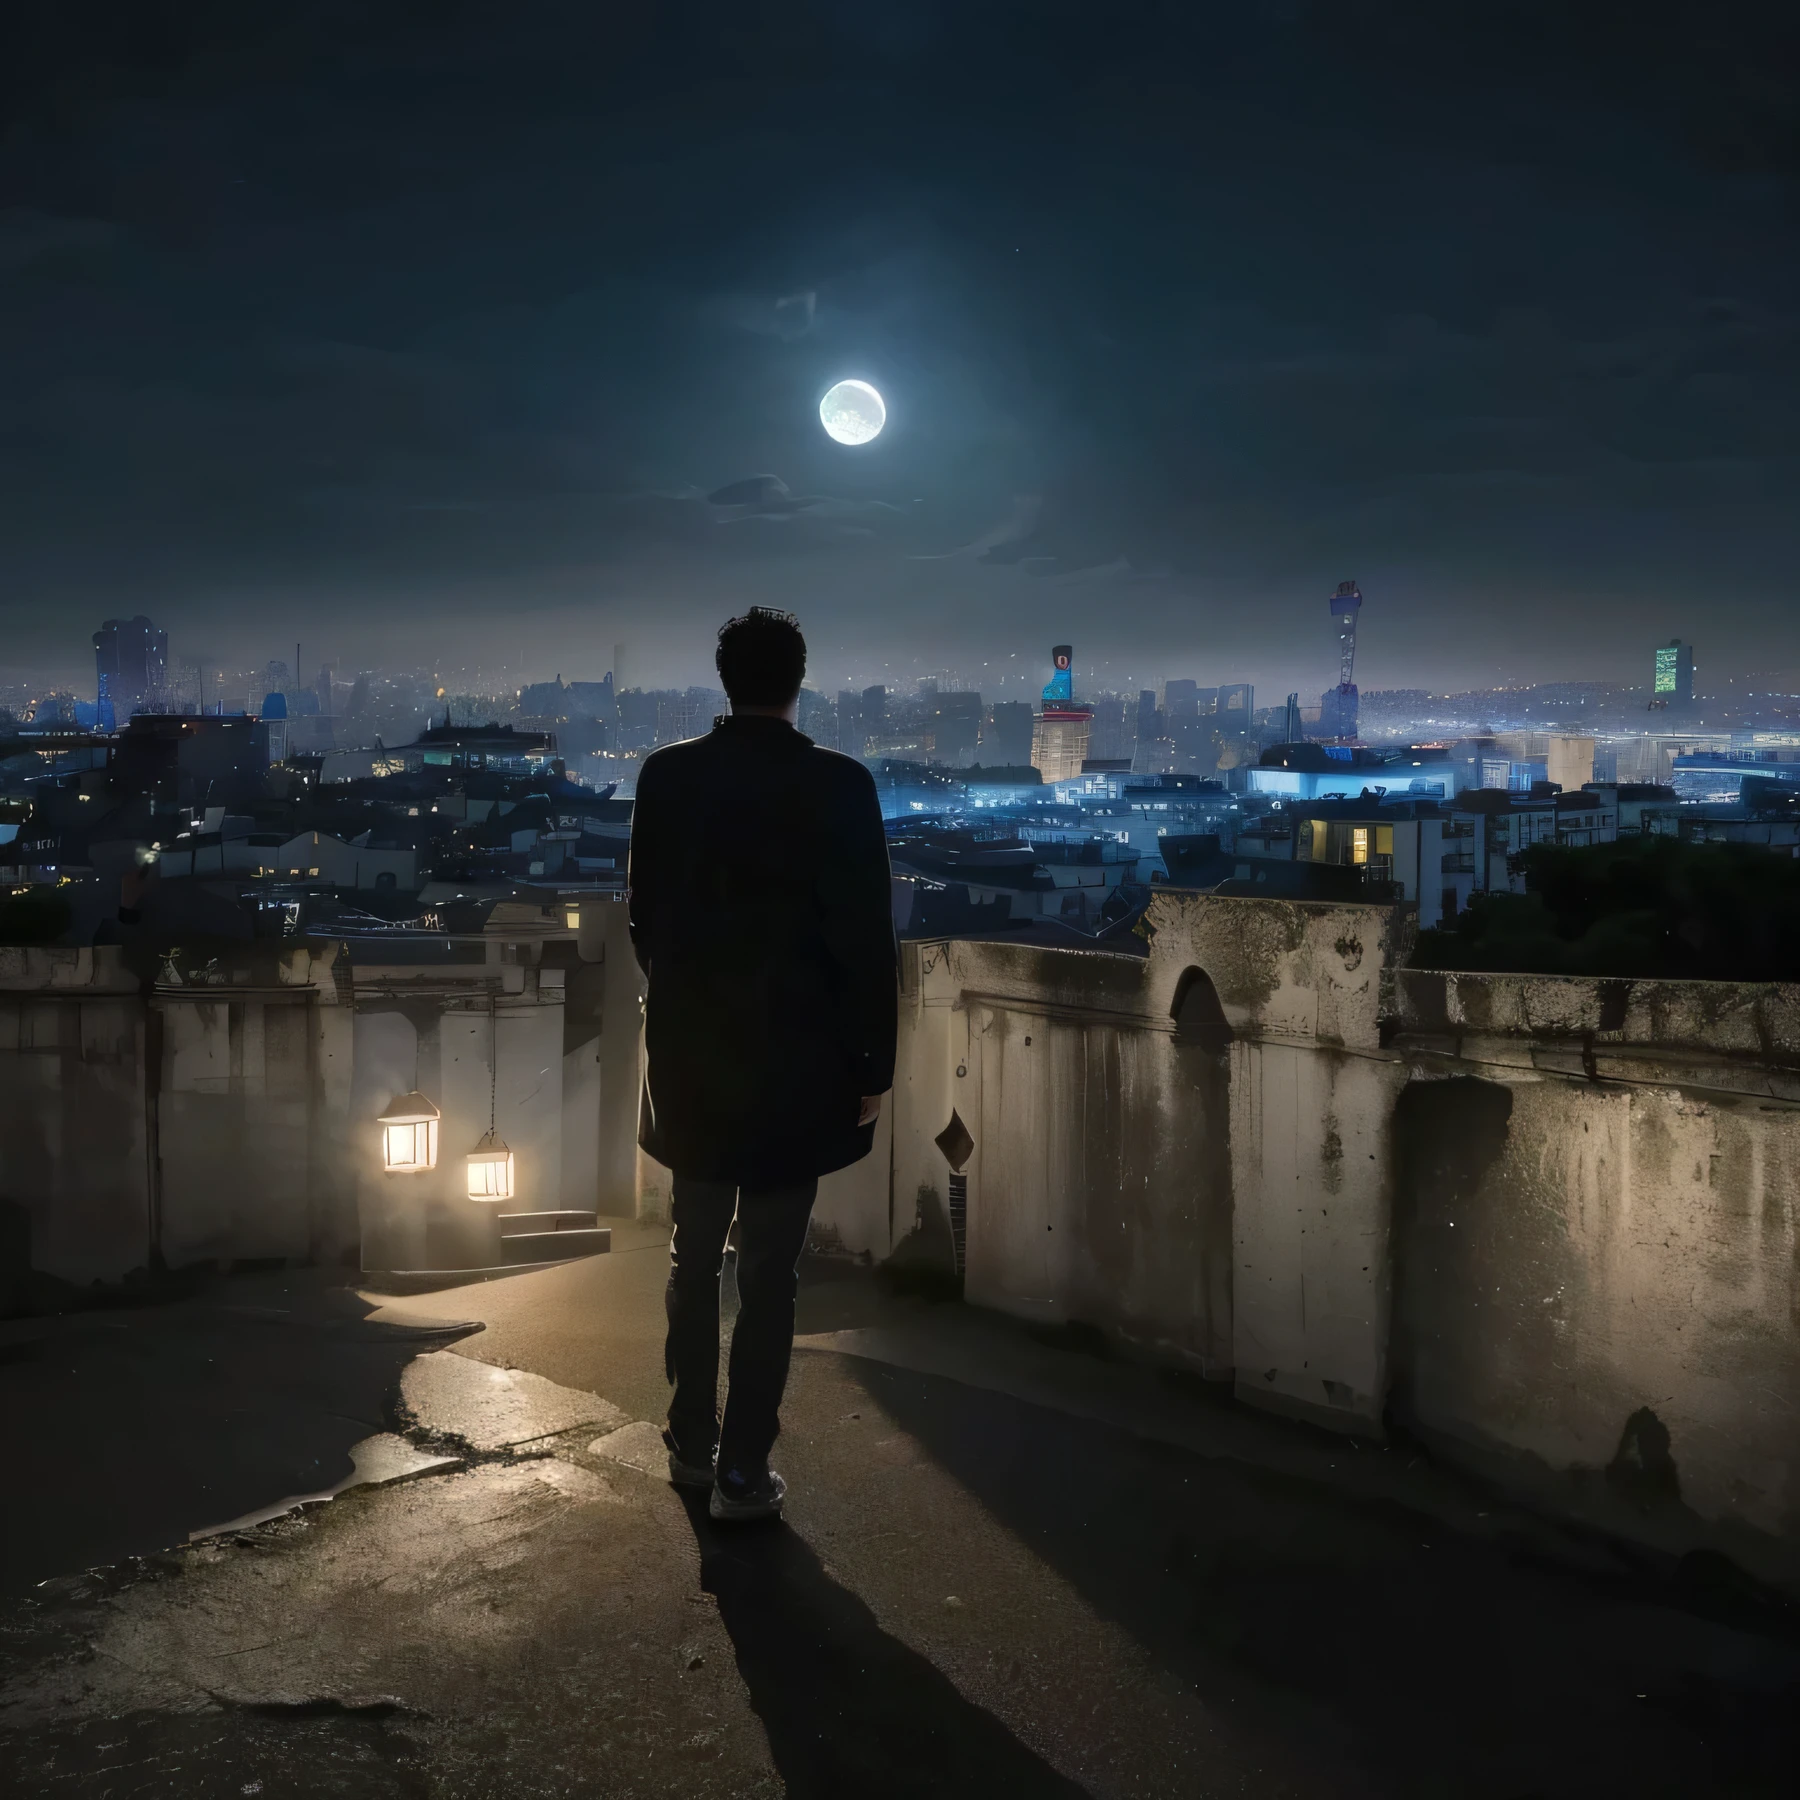 arafed man standing on a ledge 街を眺める at night, 満月を眺める, 月を眺める, 彼の後ろの月, 街を眺める, 男に投げかけられた月, 街を見渡す, 満月の夜, 近代的な都市を見渡す, 満月に向かって歩く, 月は街で大きいです. 中国の都市の風景 